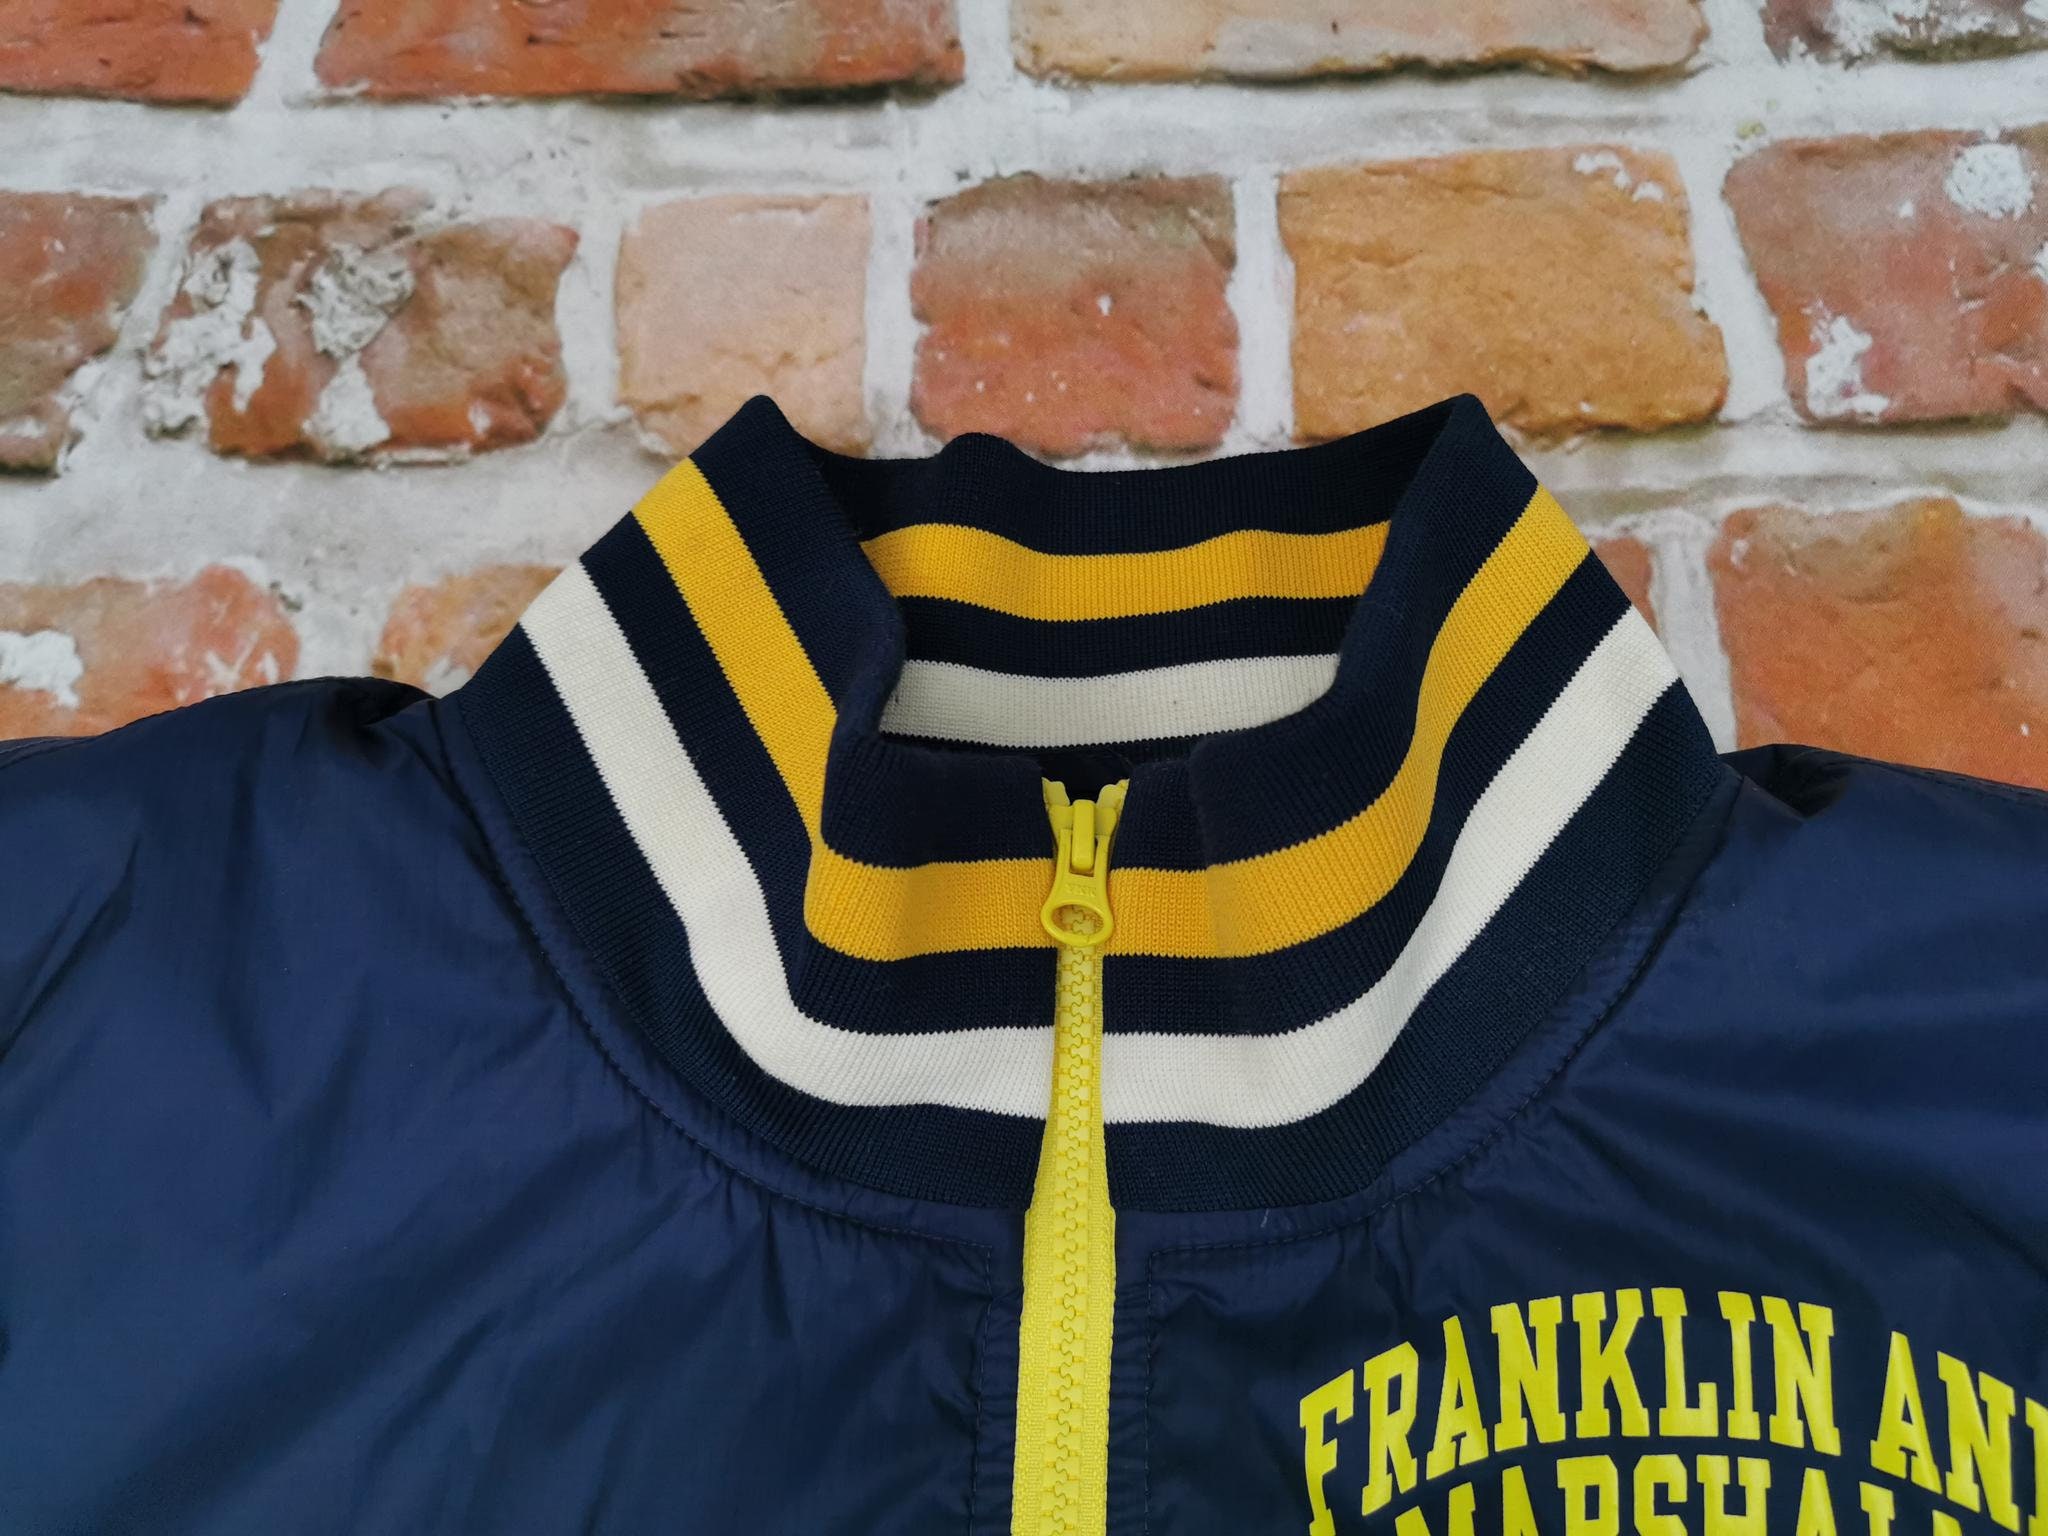 New Franklin And Marshall VARSITY College Jacket Sky Blue Vintage